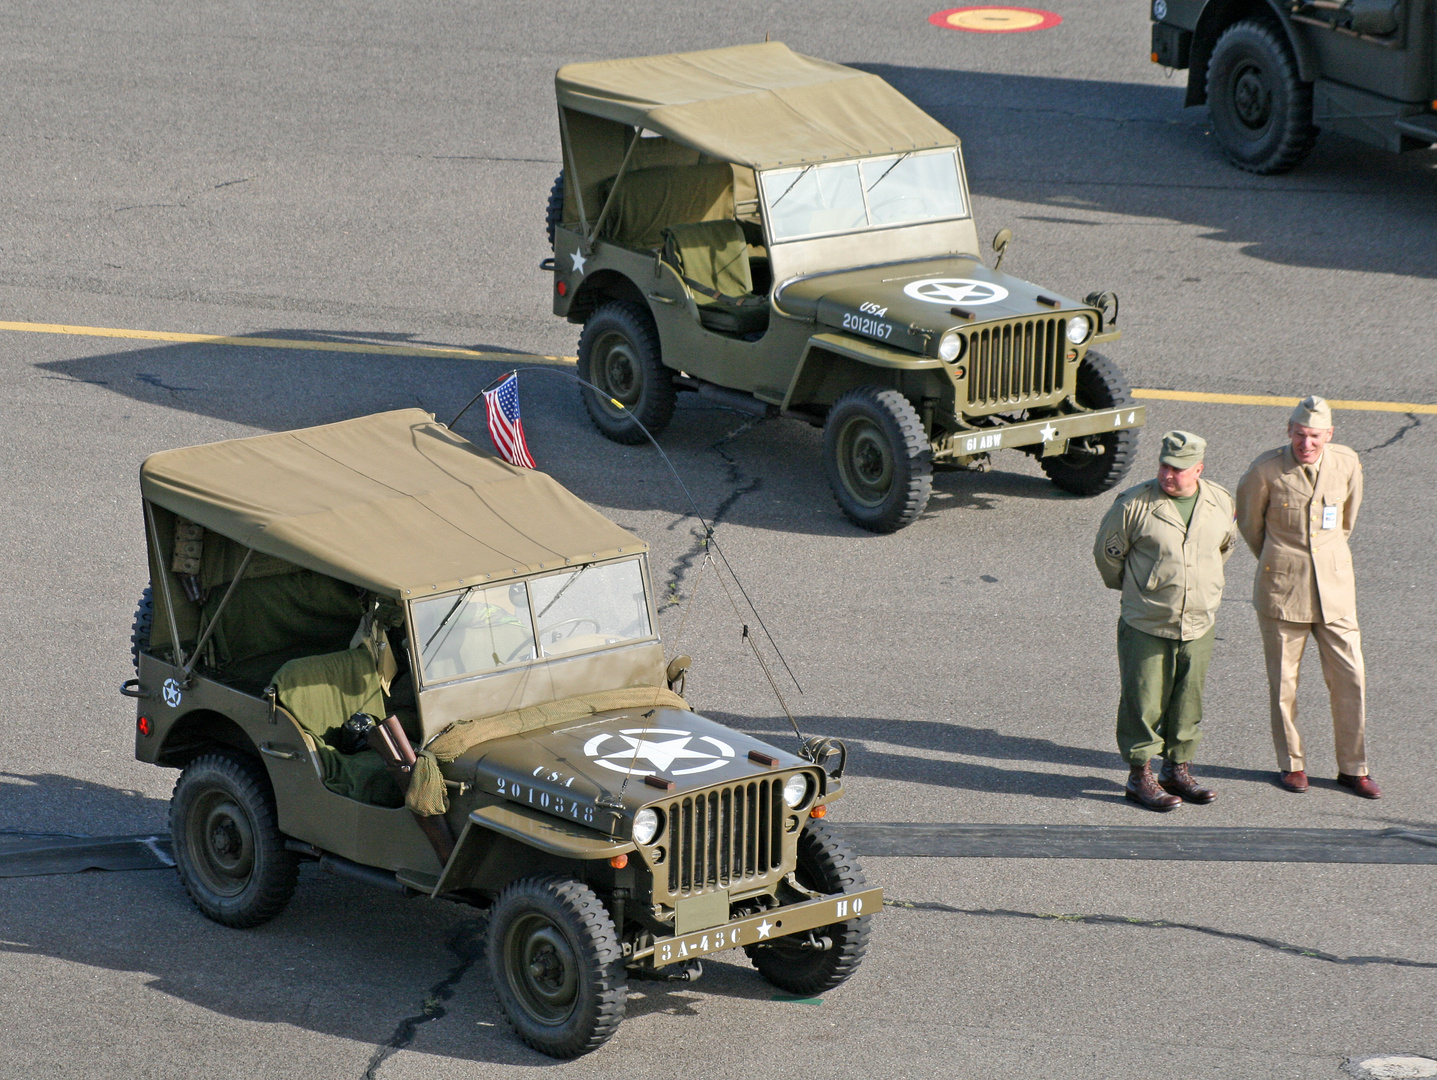 US Army Jeeps